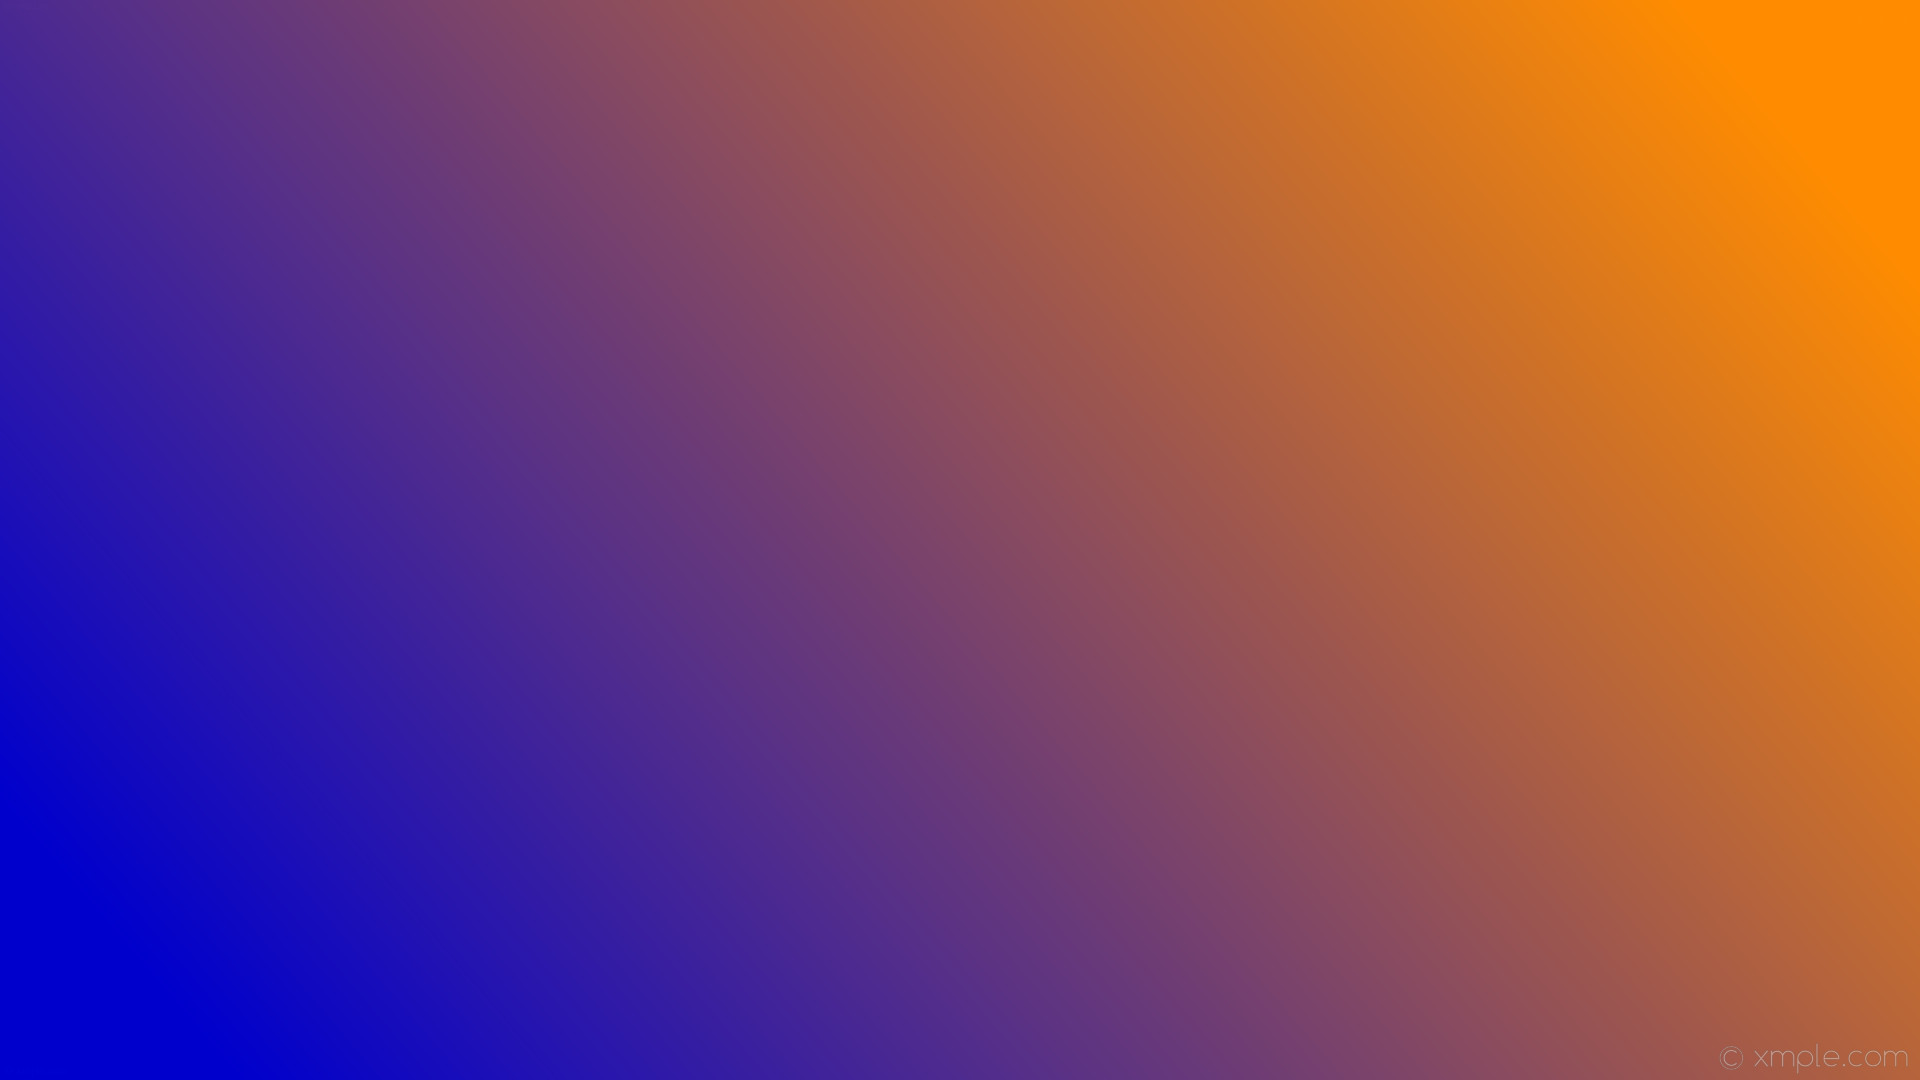 Wallpaper Linear Orange Gradient Blue Dark Orange Medium Blue Orange And Purple 19x1080 Wallpaper Teahub Io